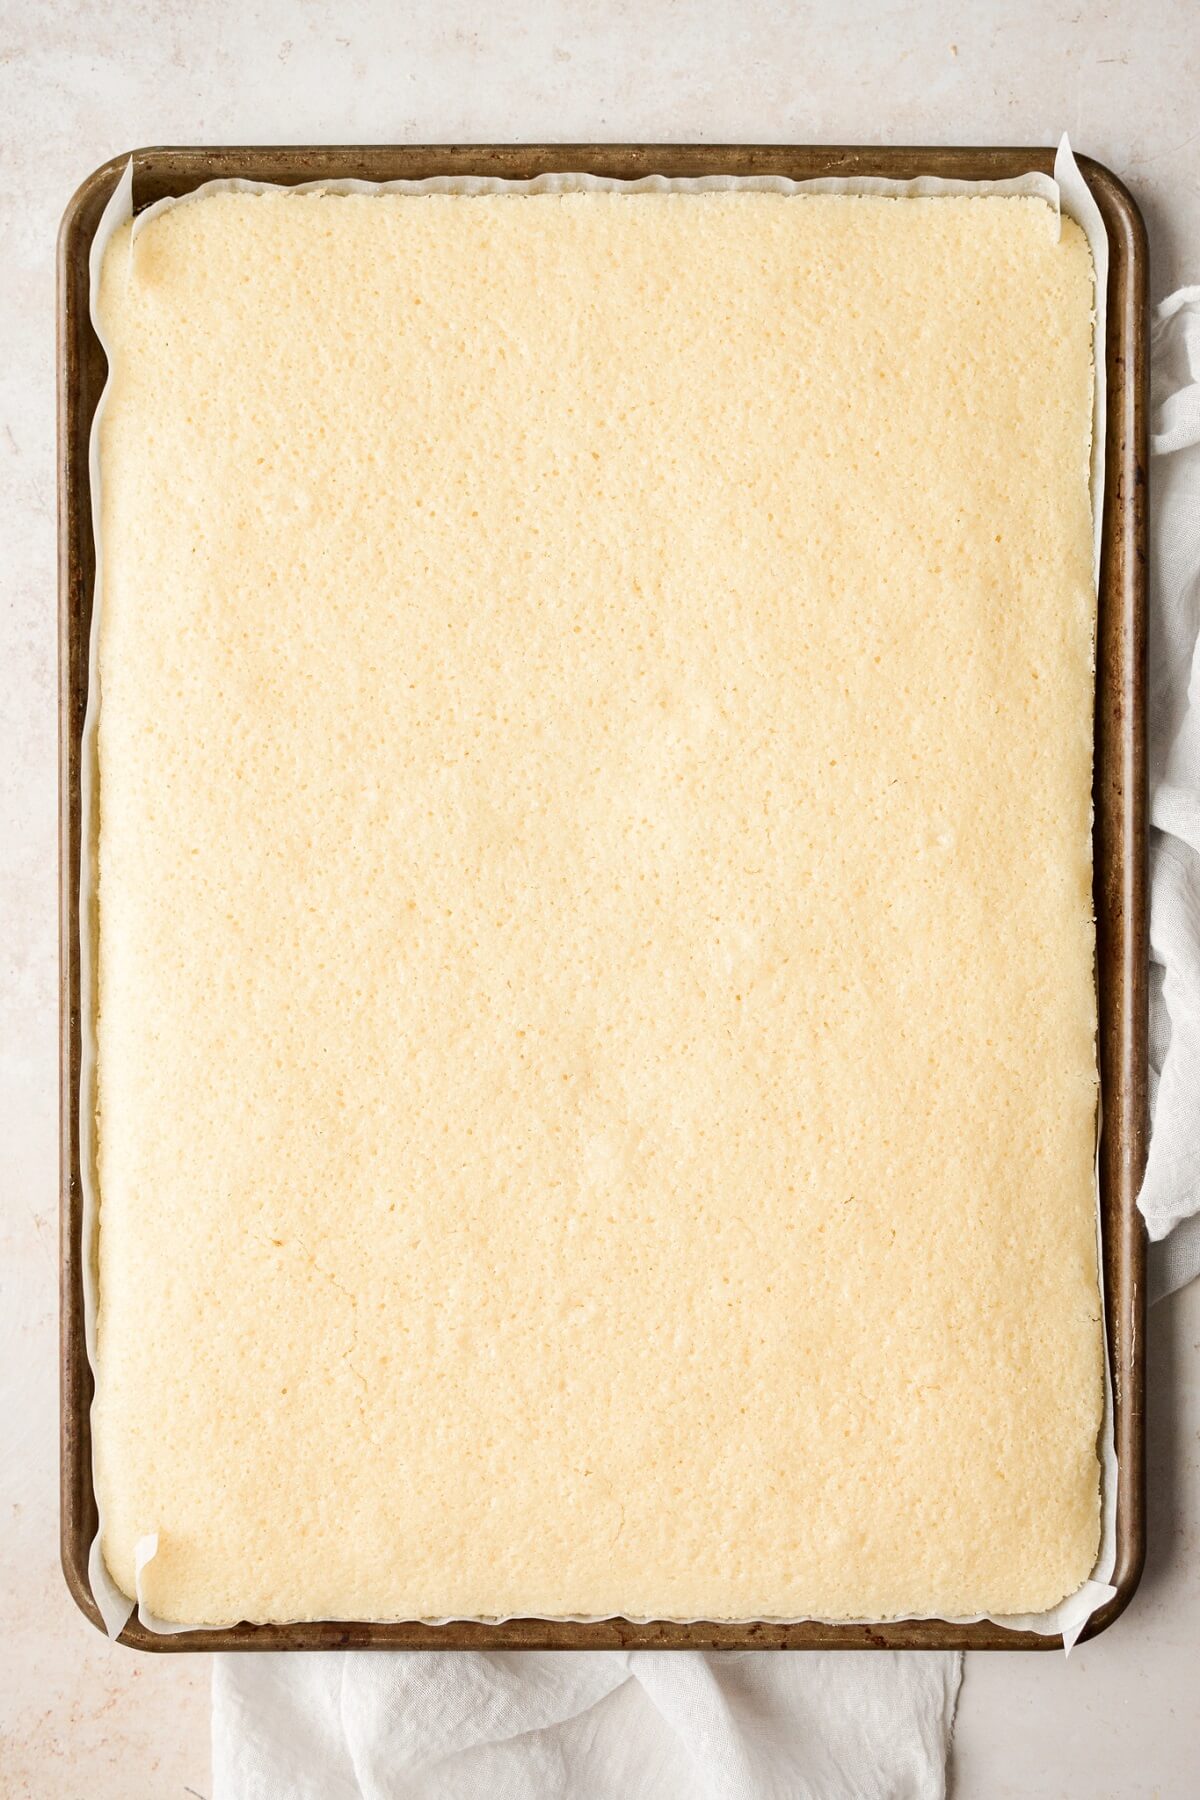 Vanilla cake baked in a sheet pan.